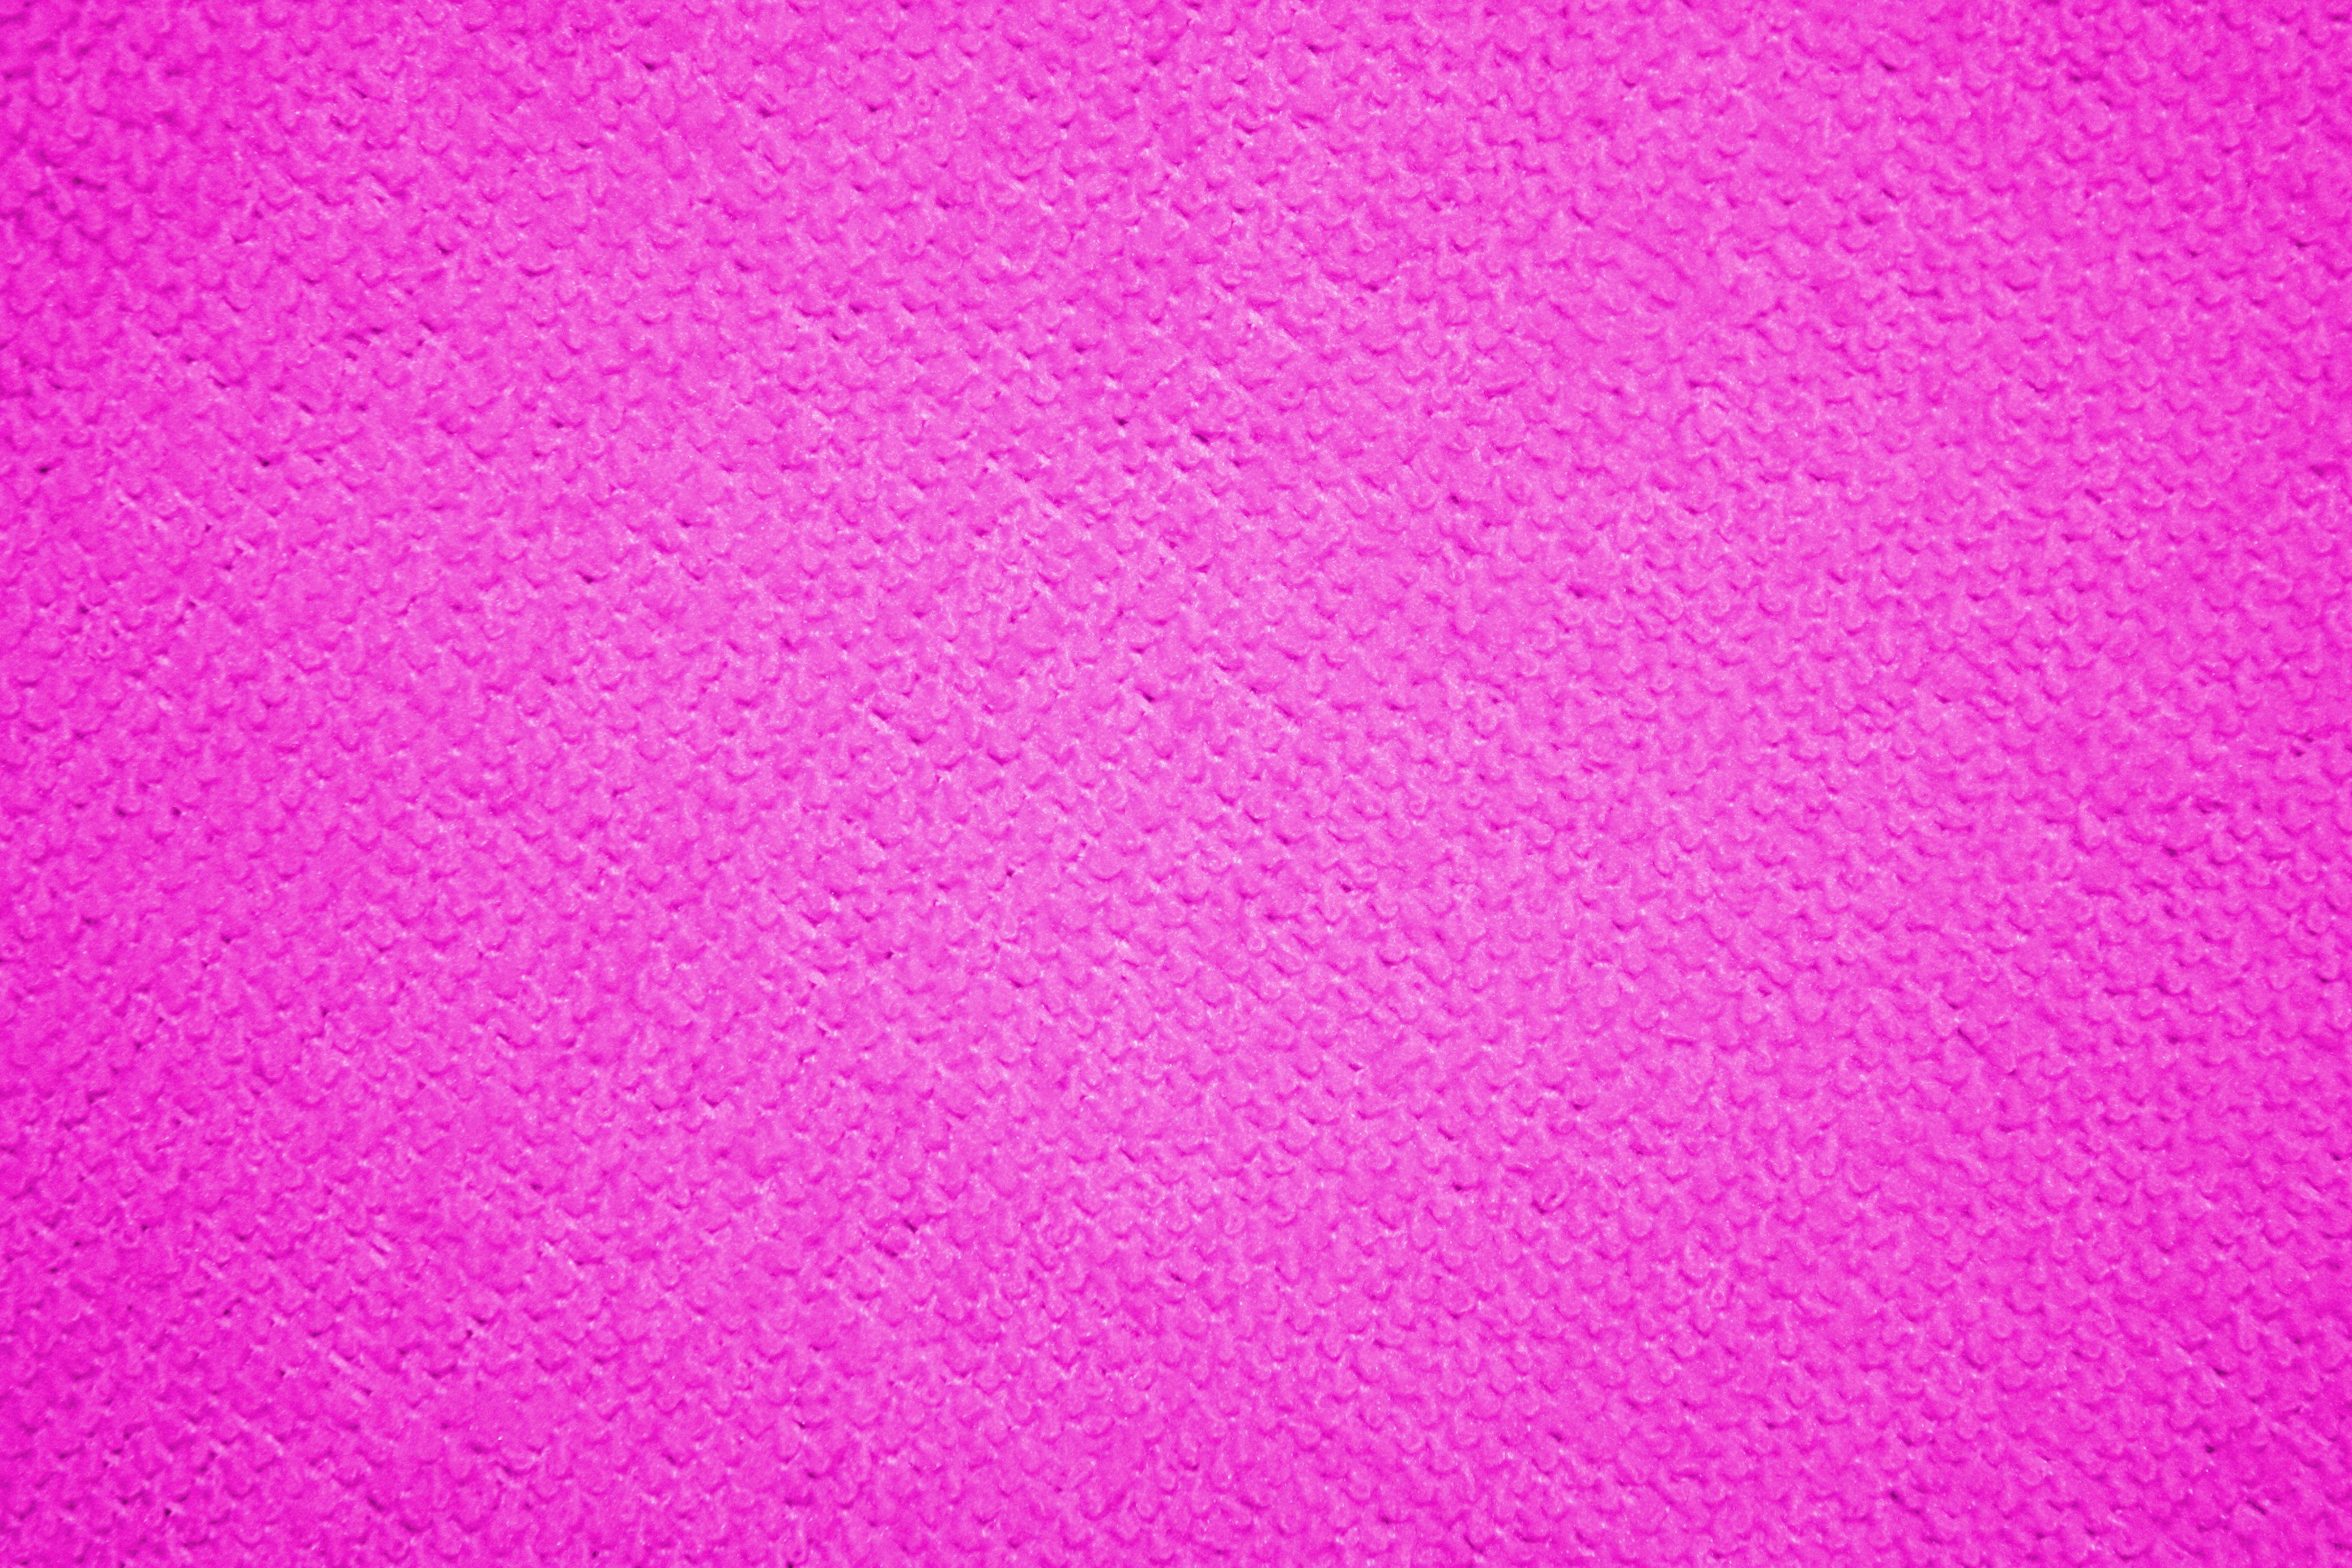 Hot Pink Microfiber Cloth Fabric Texture Picture | Free Photograph | Photos  Public Domain